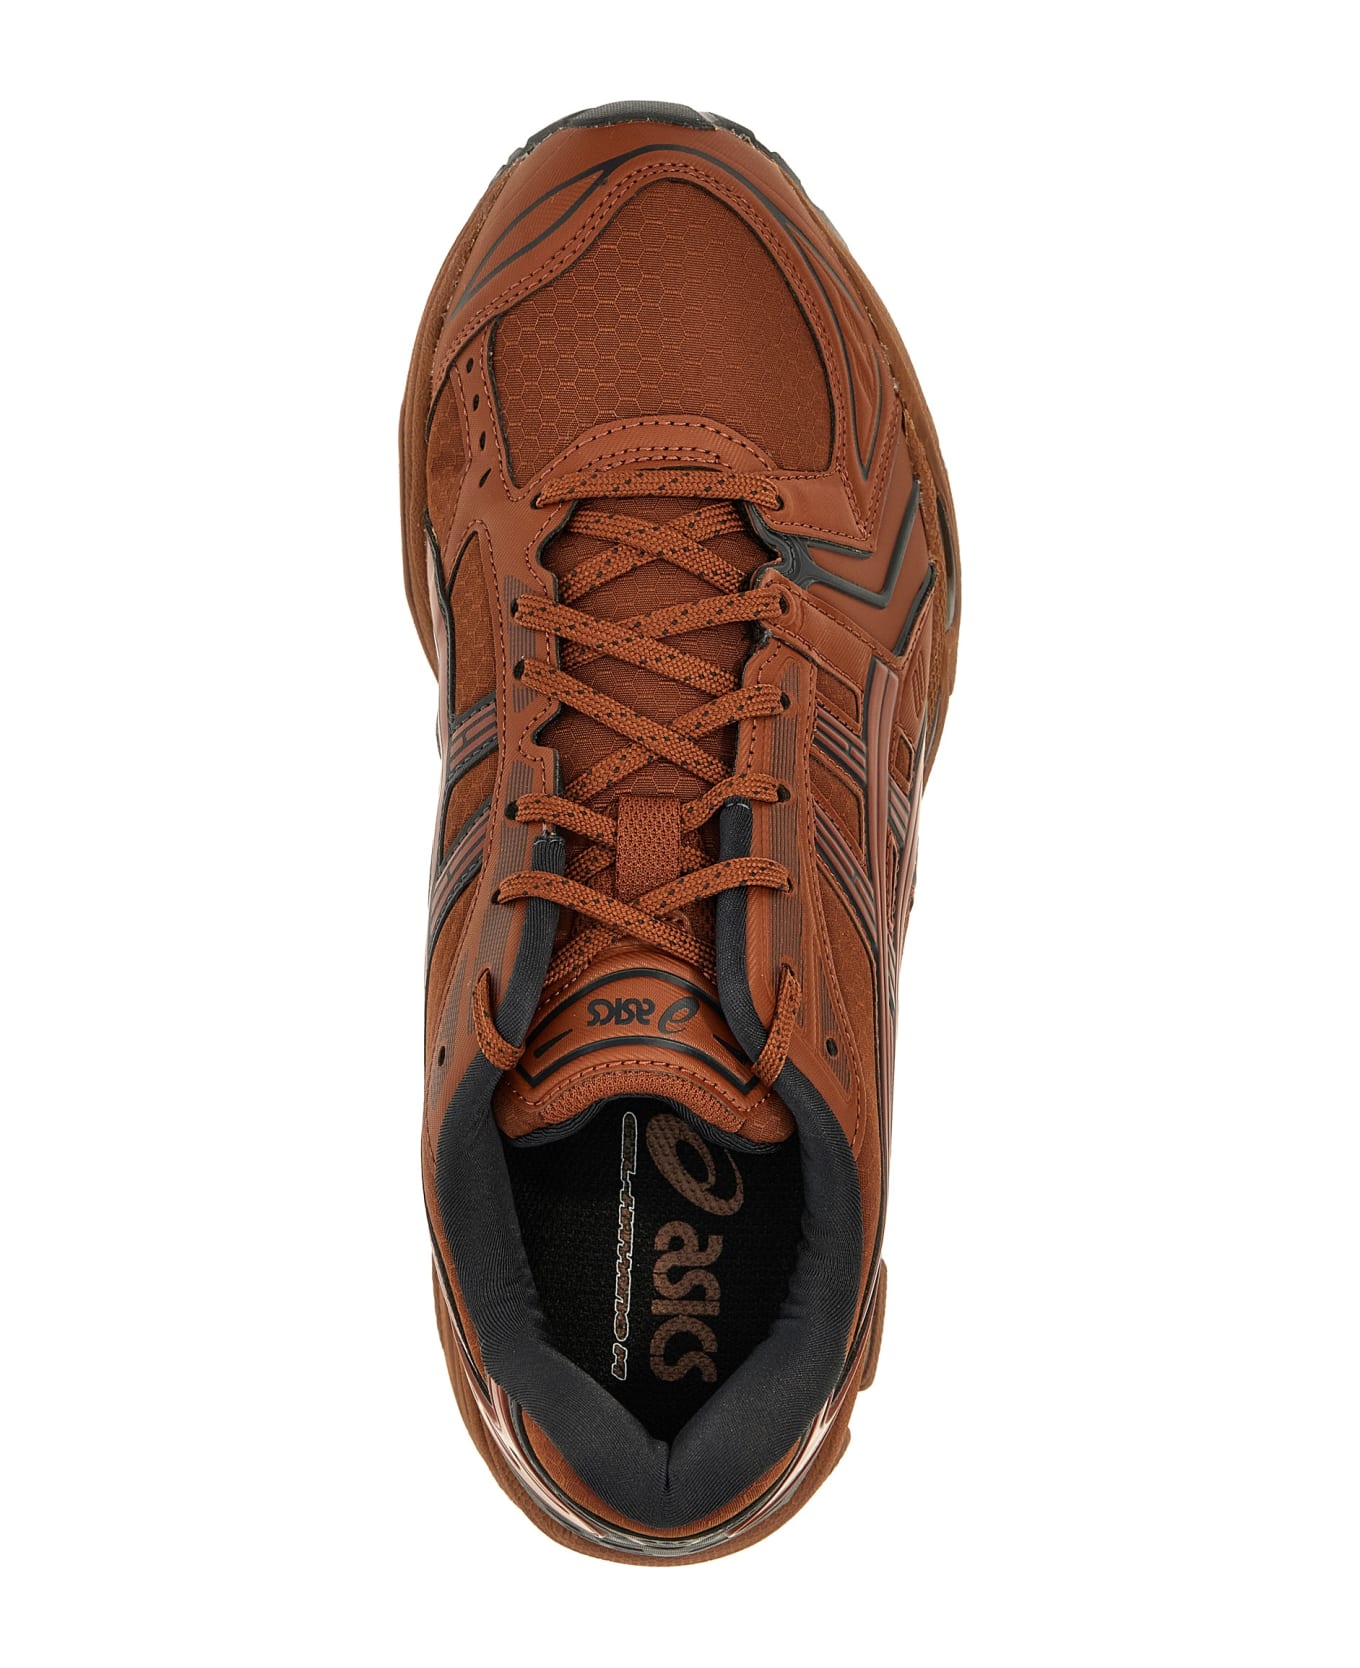 Asics 'gel-kayano 14' Sneakers - Rusty Brown/graphite Grey スニーカー